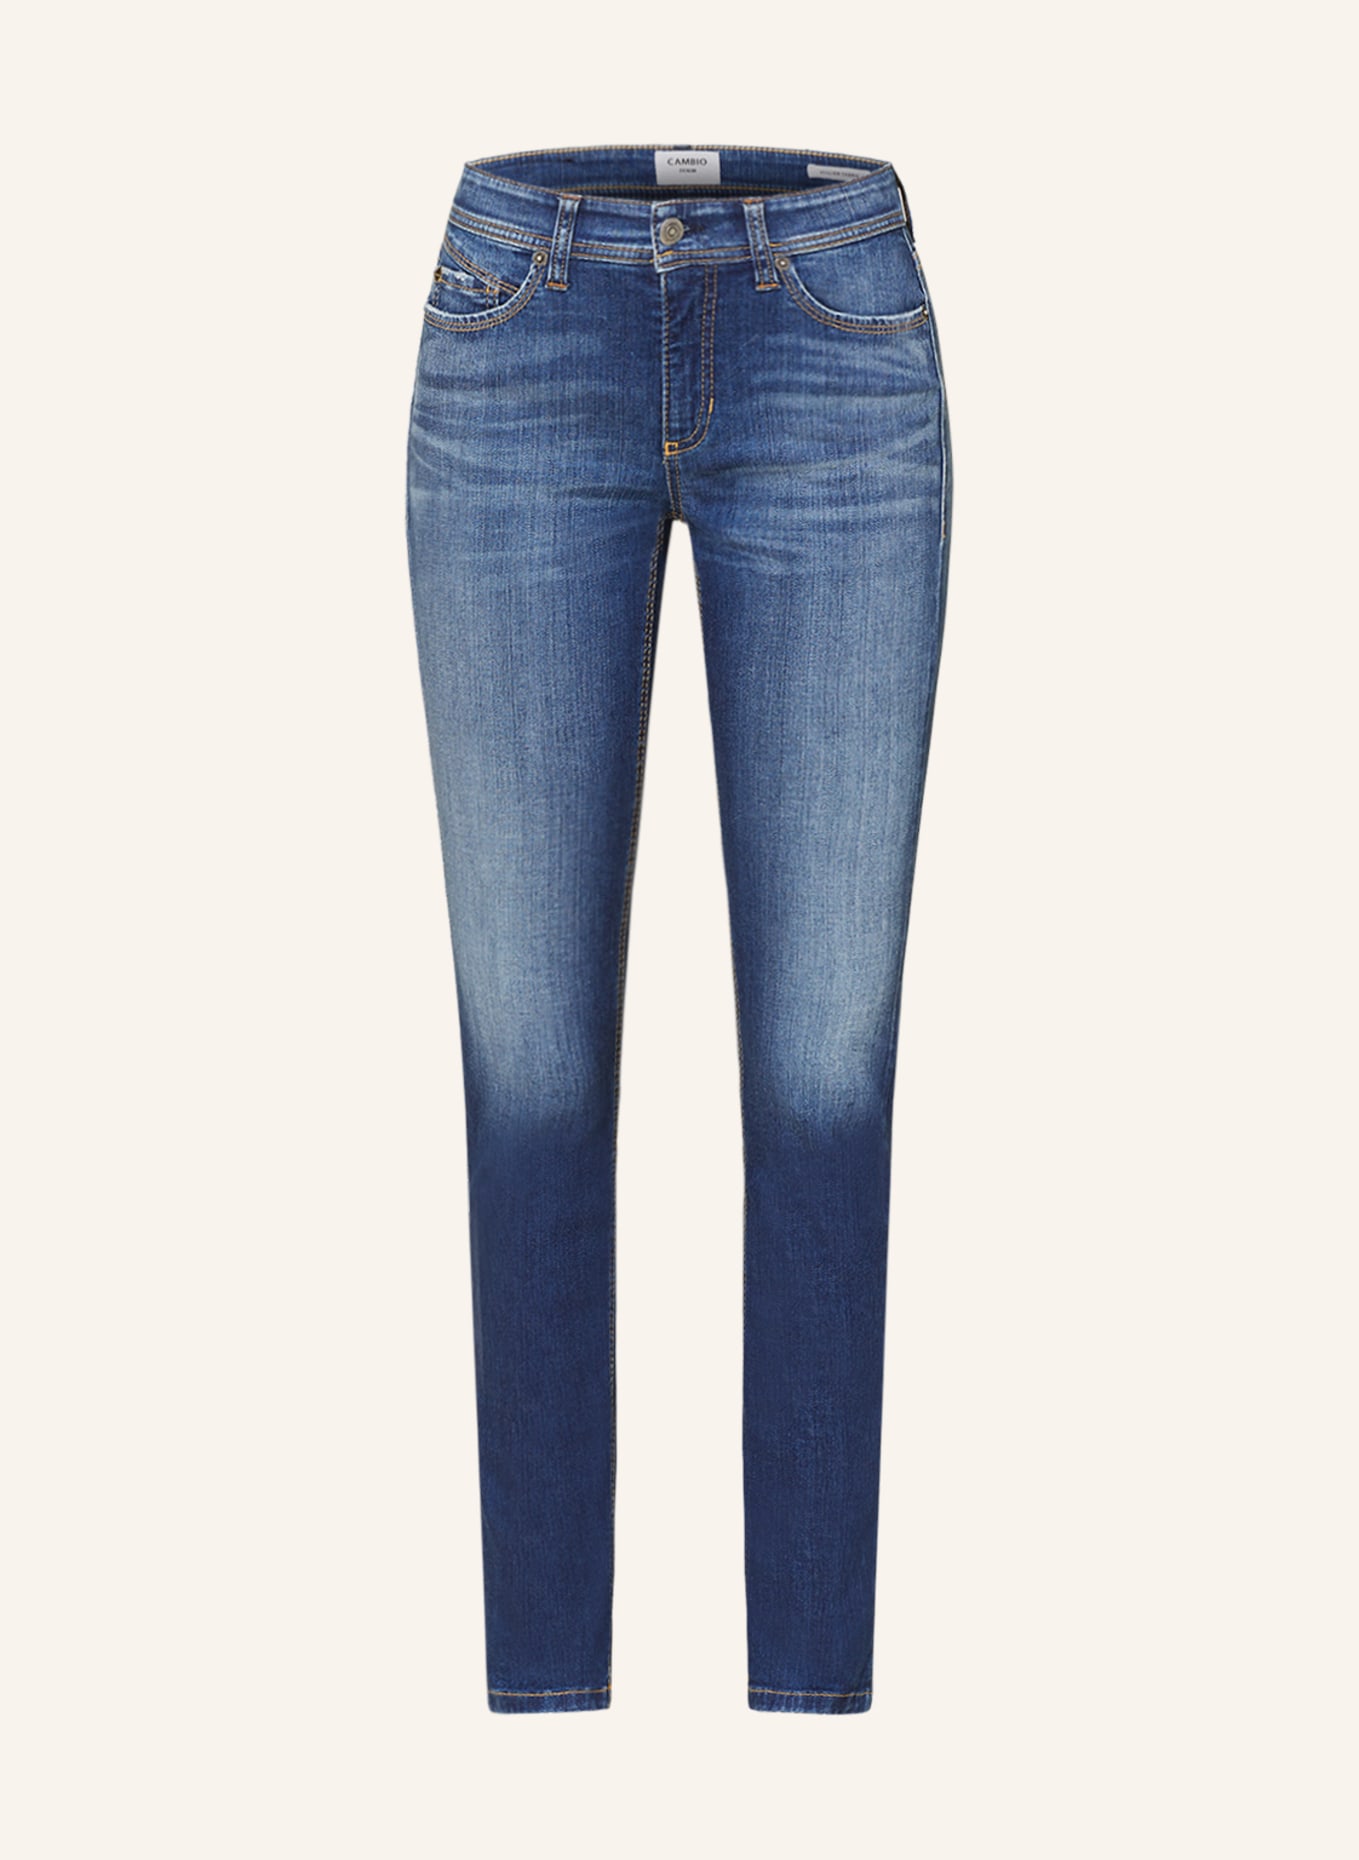 CAMBIO Skinny Jeans PARLA mit Pailletten, Farbe: 5061 medium contrast splinted (Bild 1)